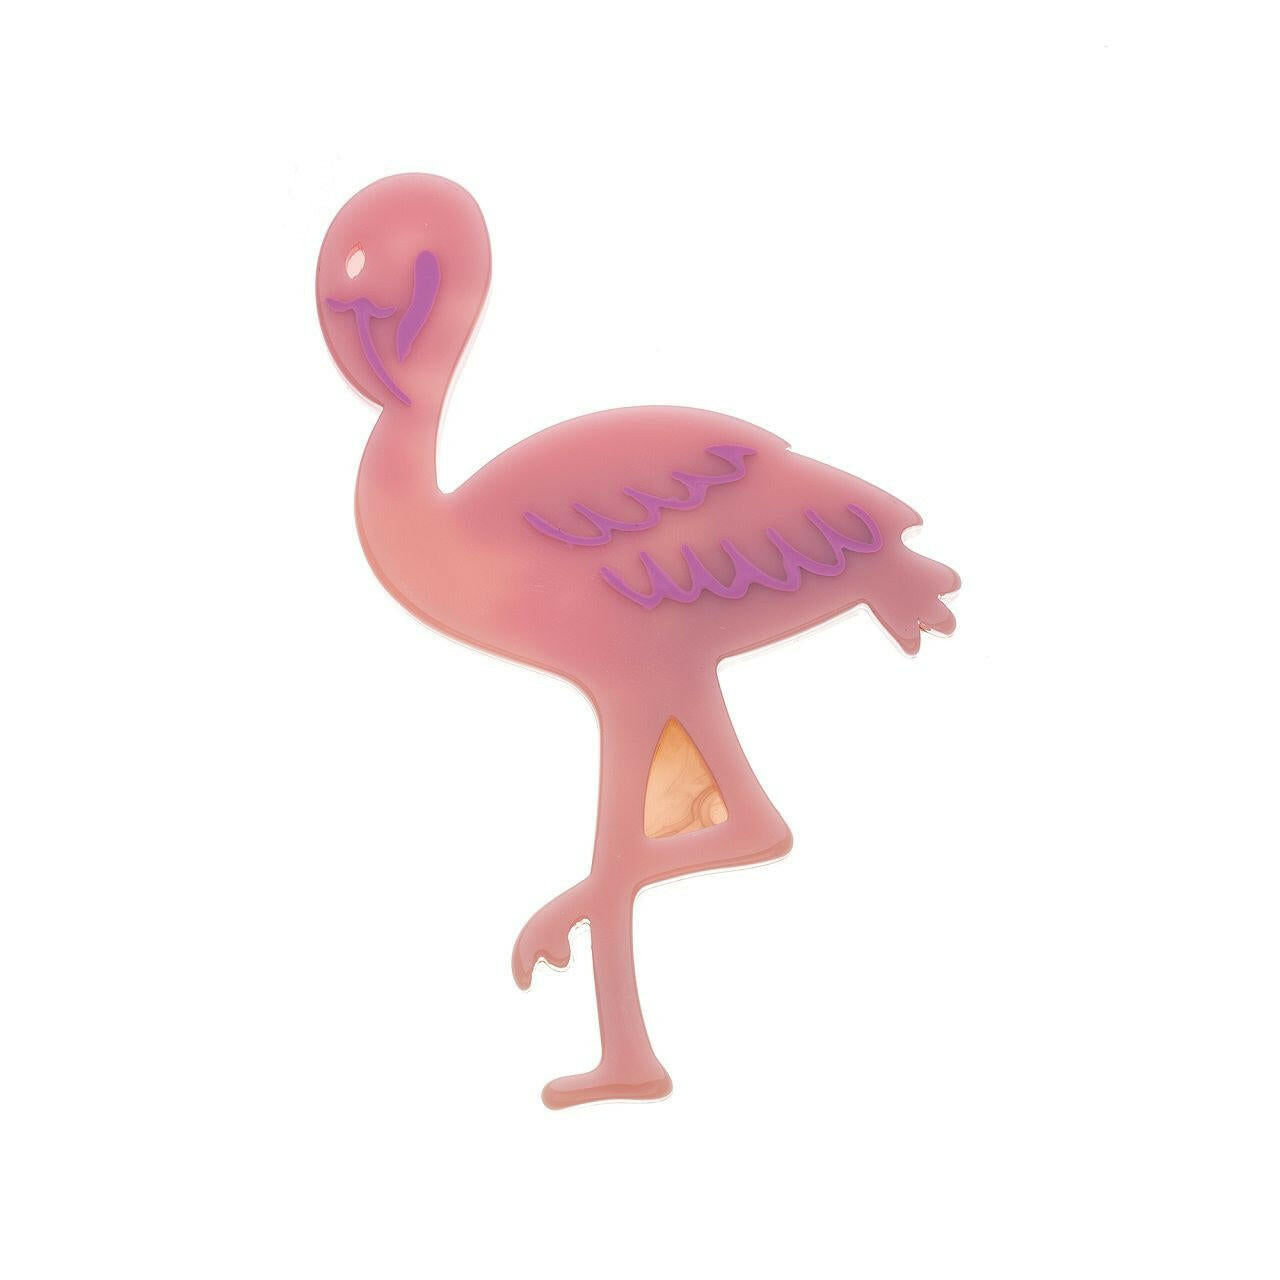 Tücherbroschen-Flamingo.